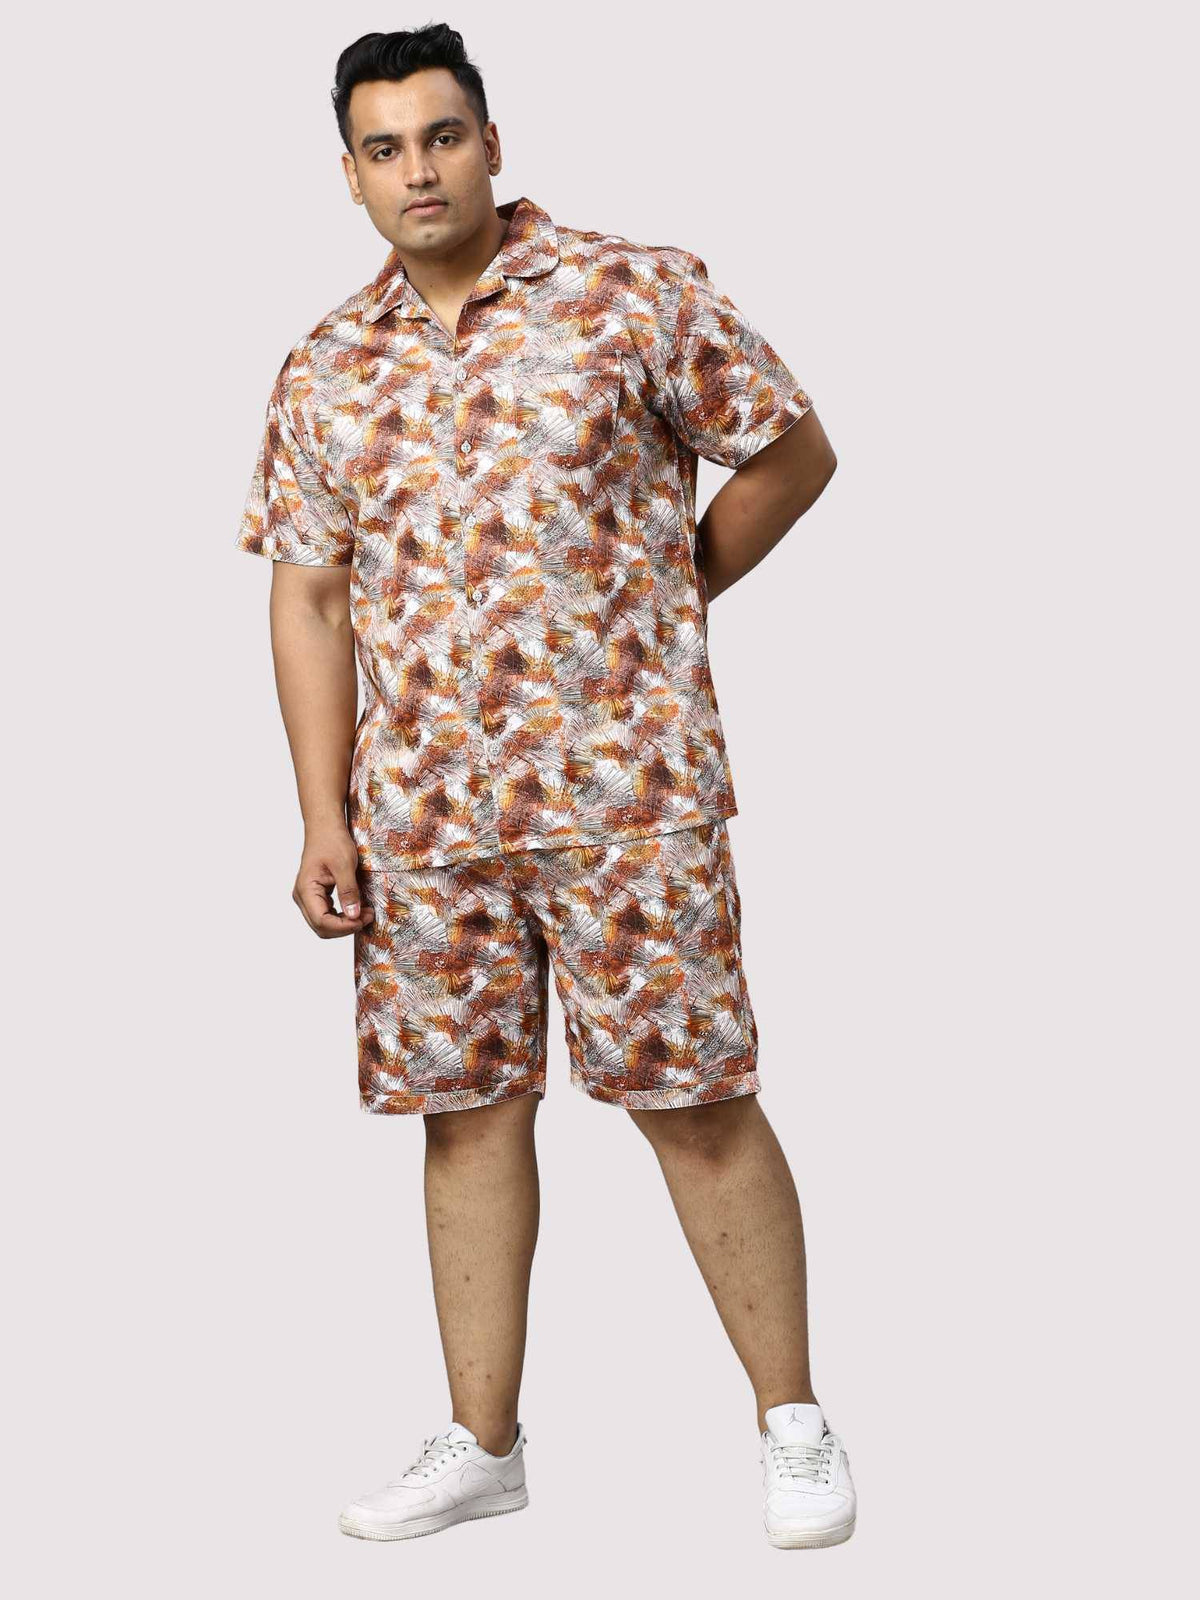 Sandstone Digital Printed Half Co-Ords Men's Plus Size - Guniaa Fashions